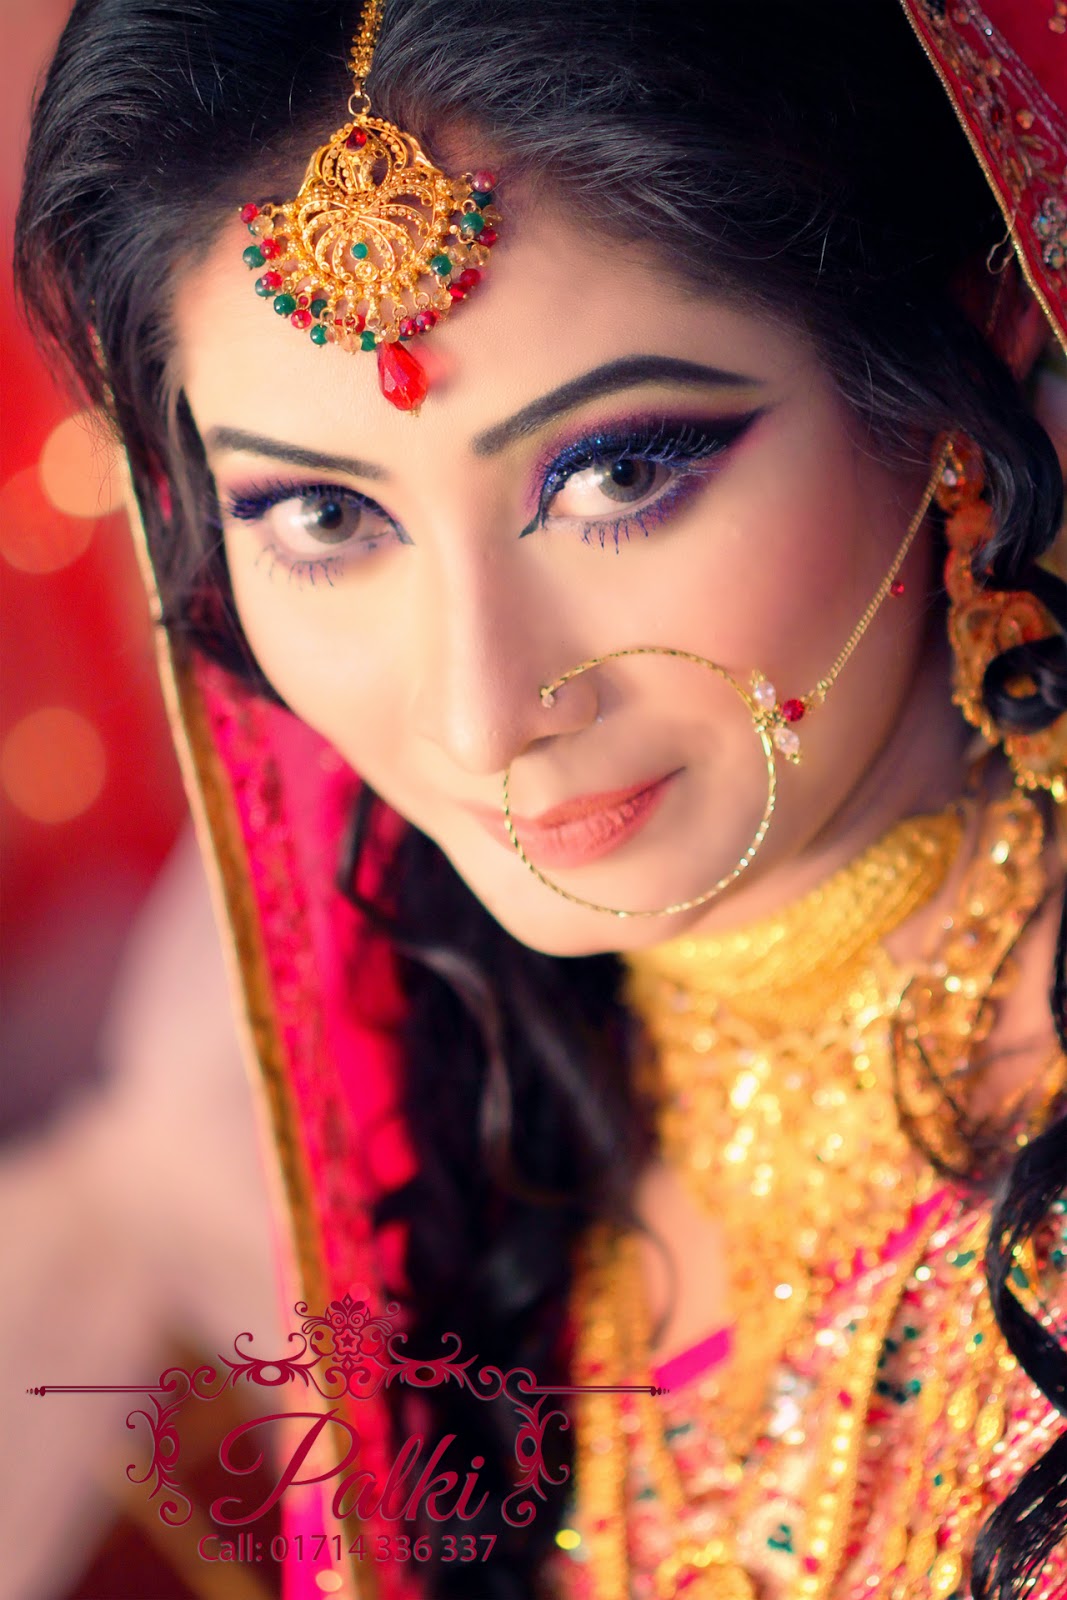  Wedding Photographer in Bangladesh: Bangladeshi Wedding Photographer